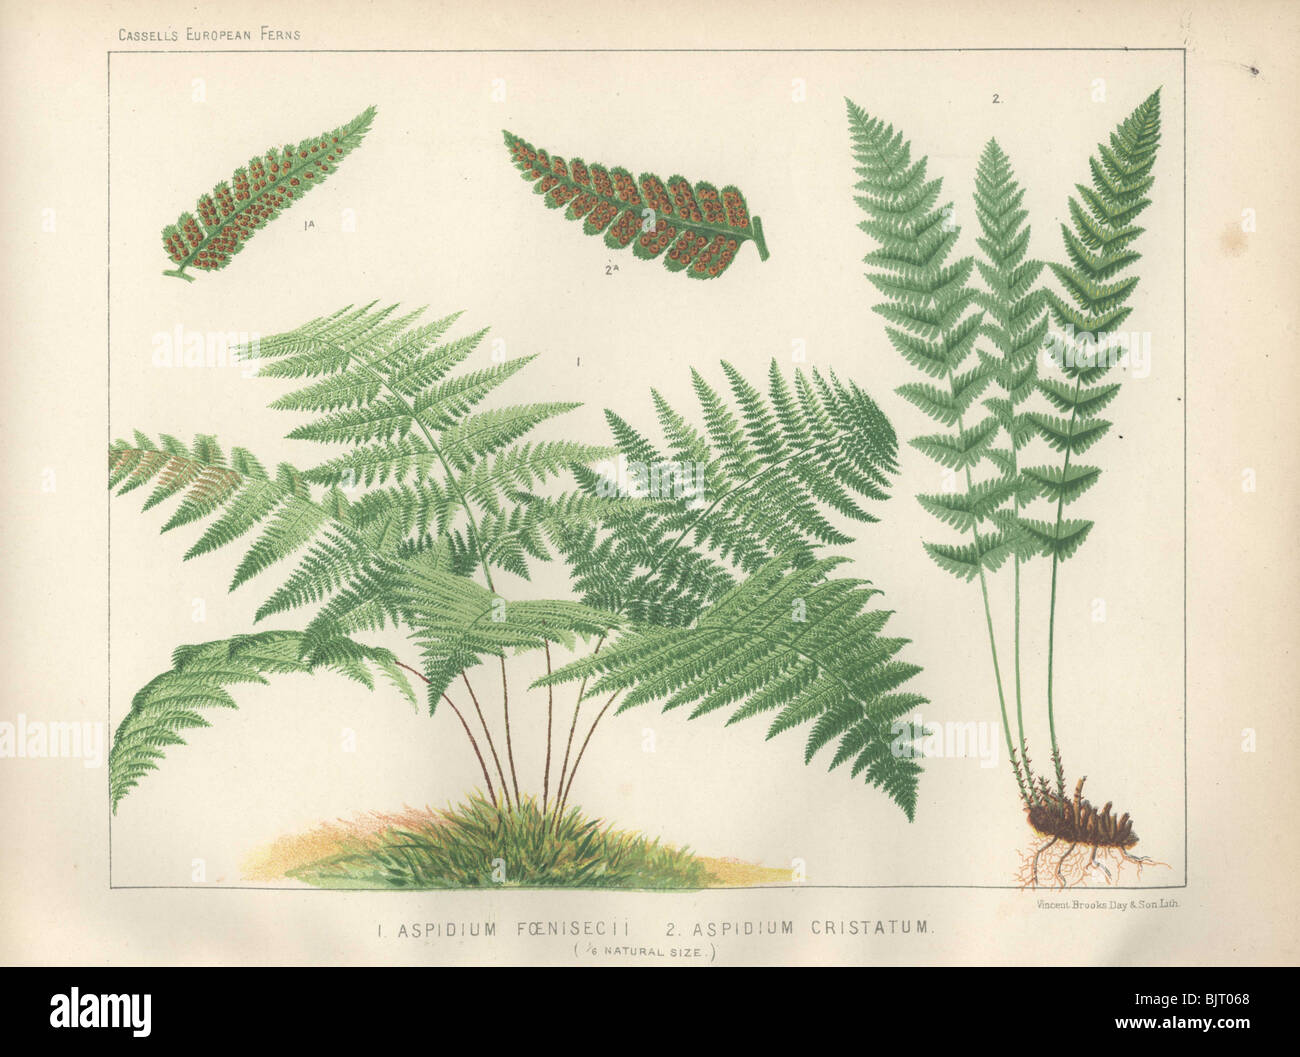 A spreading fern (Aspidium foenisecii) at left, and an upright fern (Aspidium cristatum) at right. Stock Photo